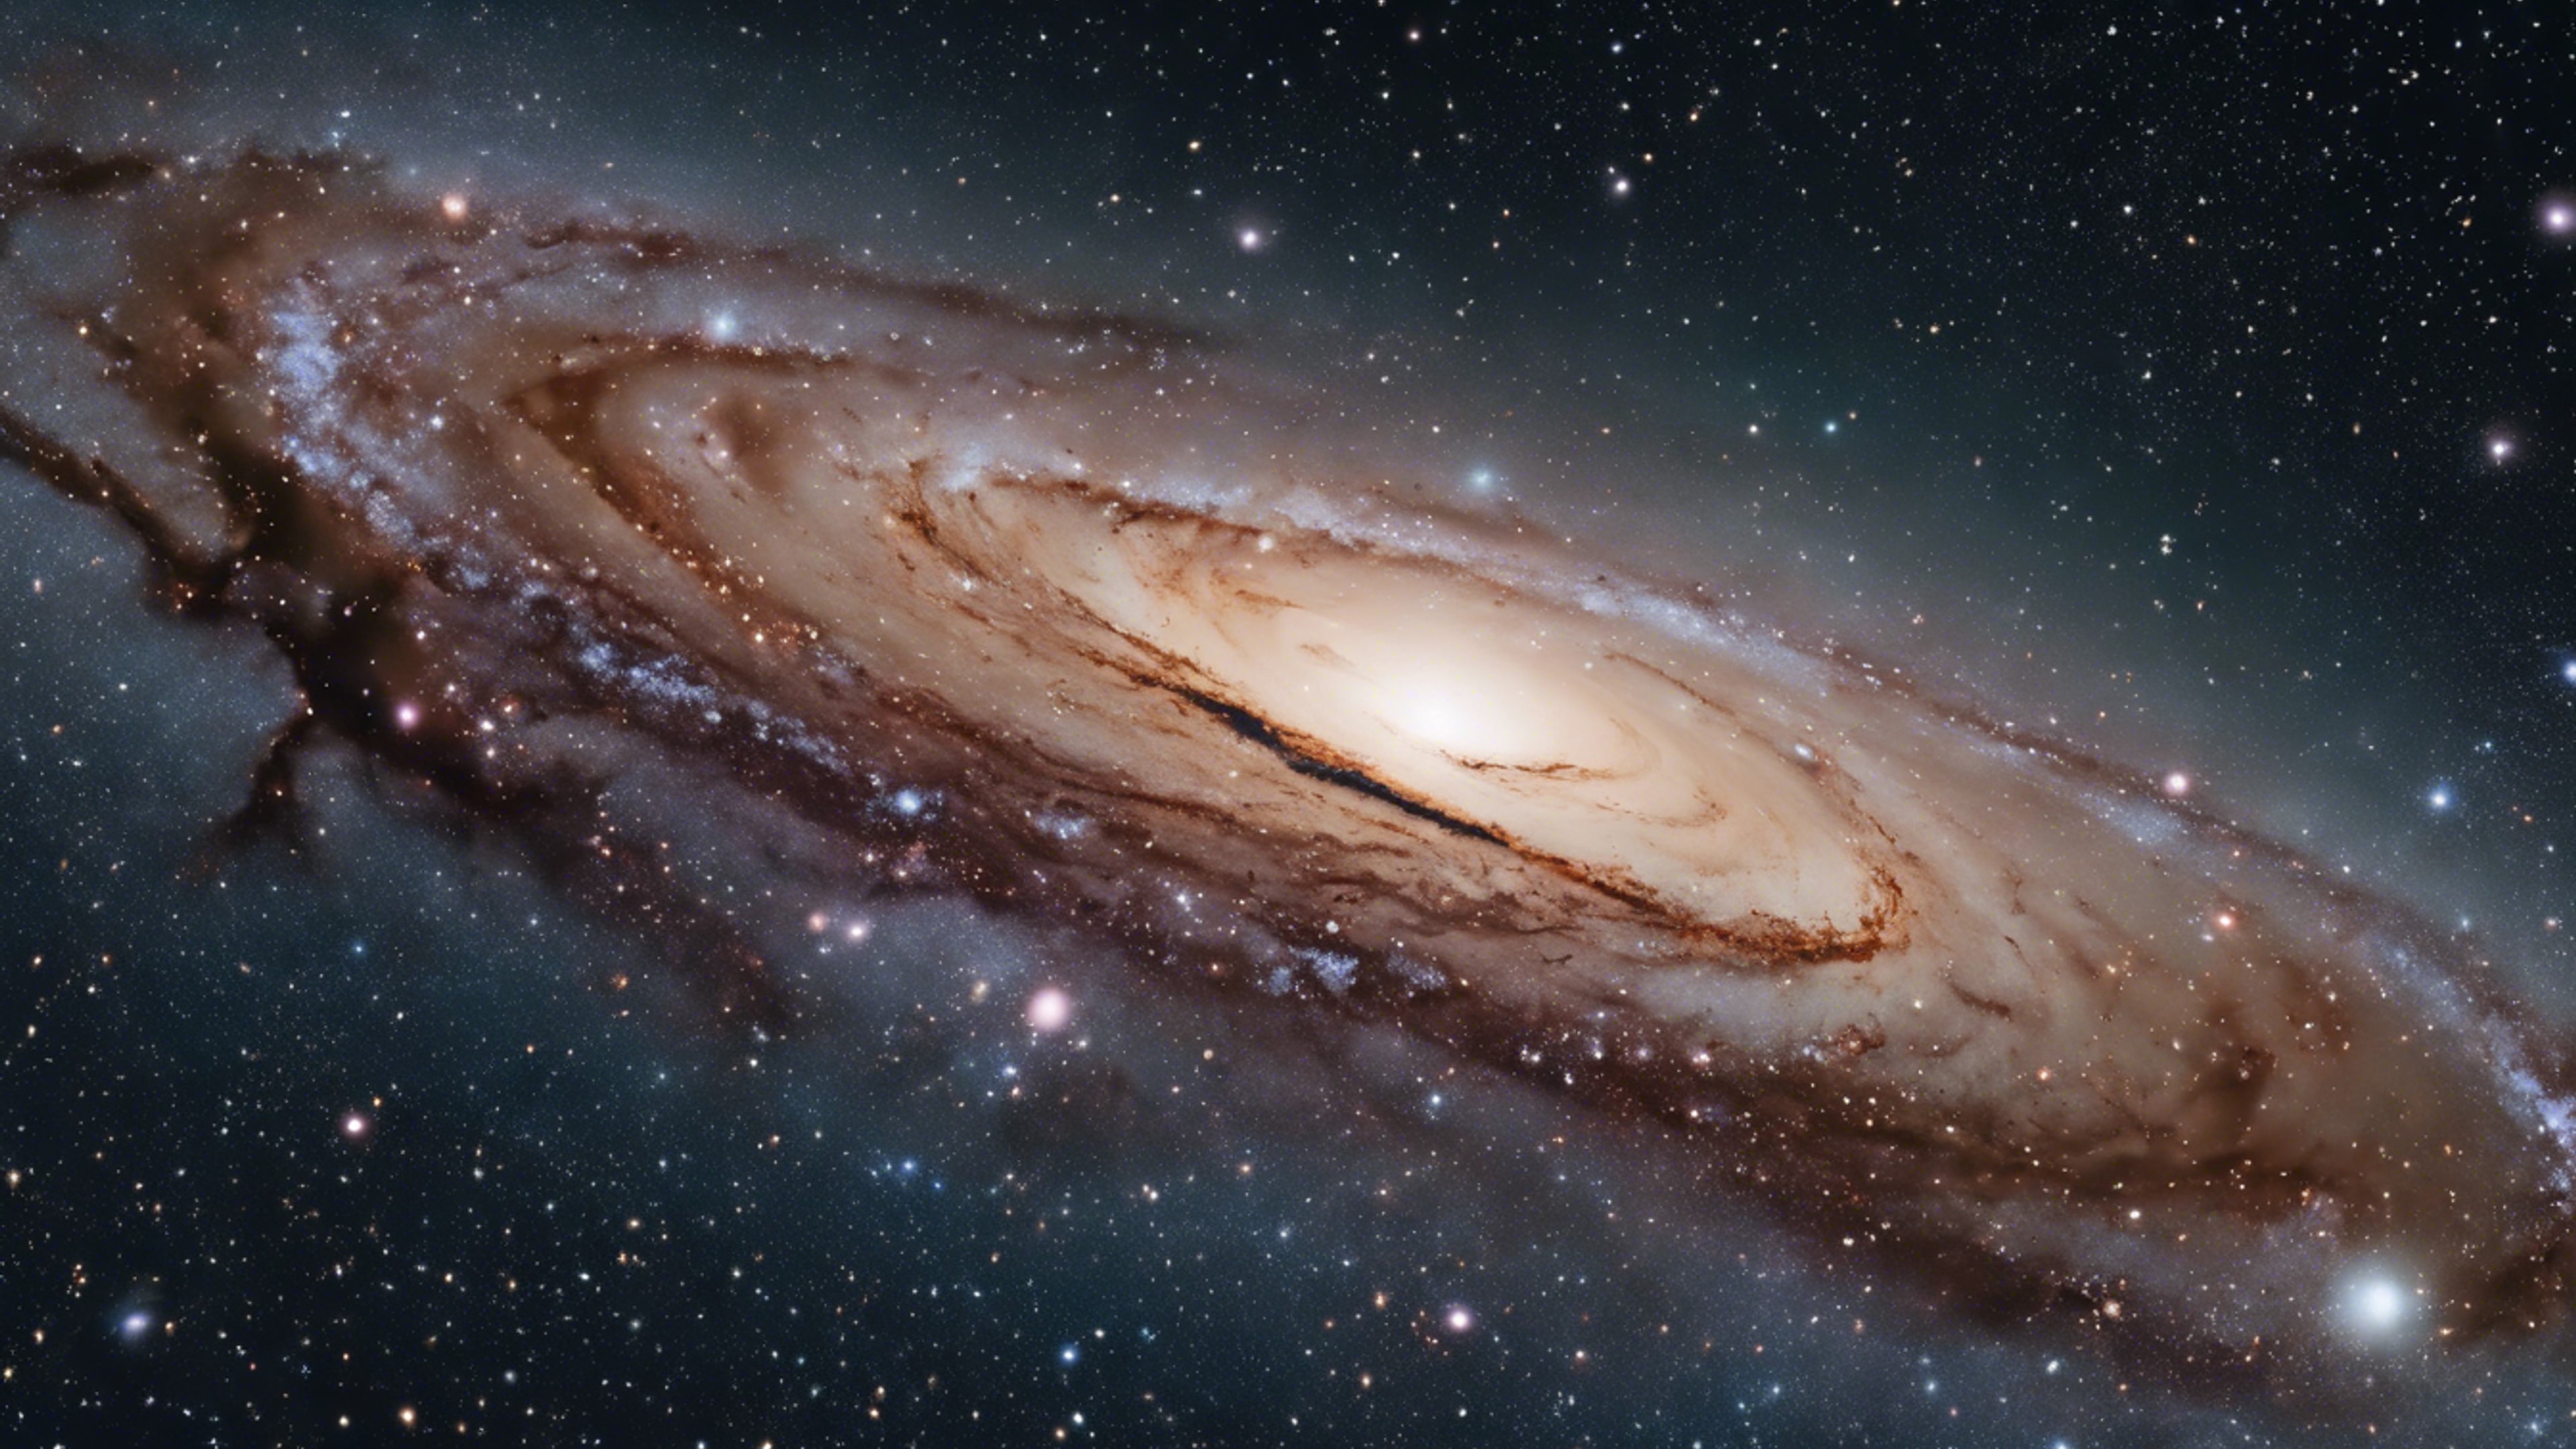 A star field with the beautiful spiral Andromeda galaxy in the backdrop. Обои[e203e5da70ed49c49672]